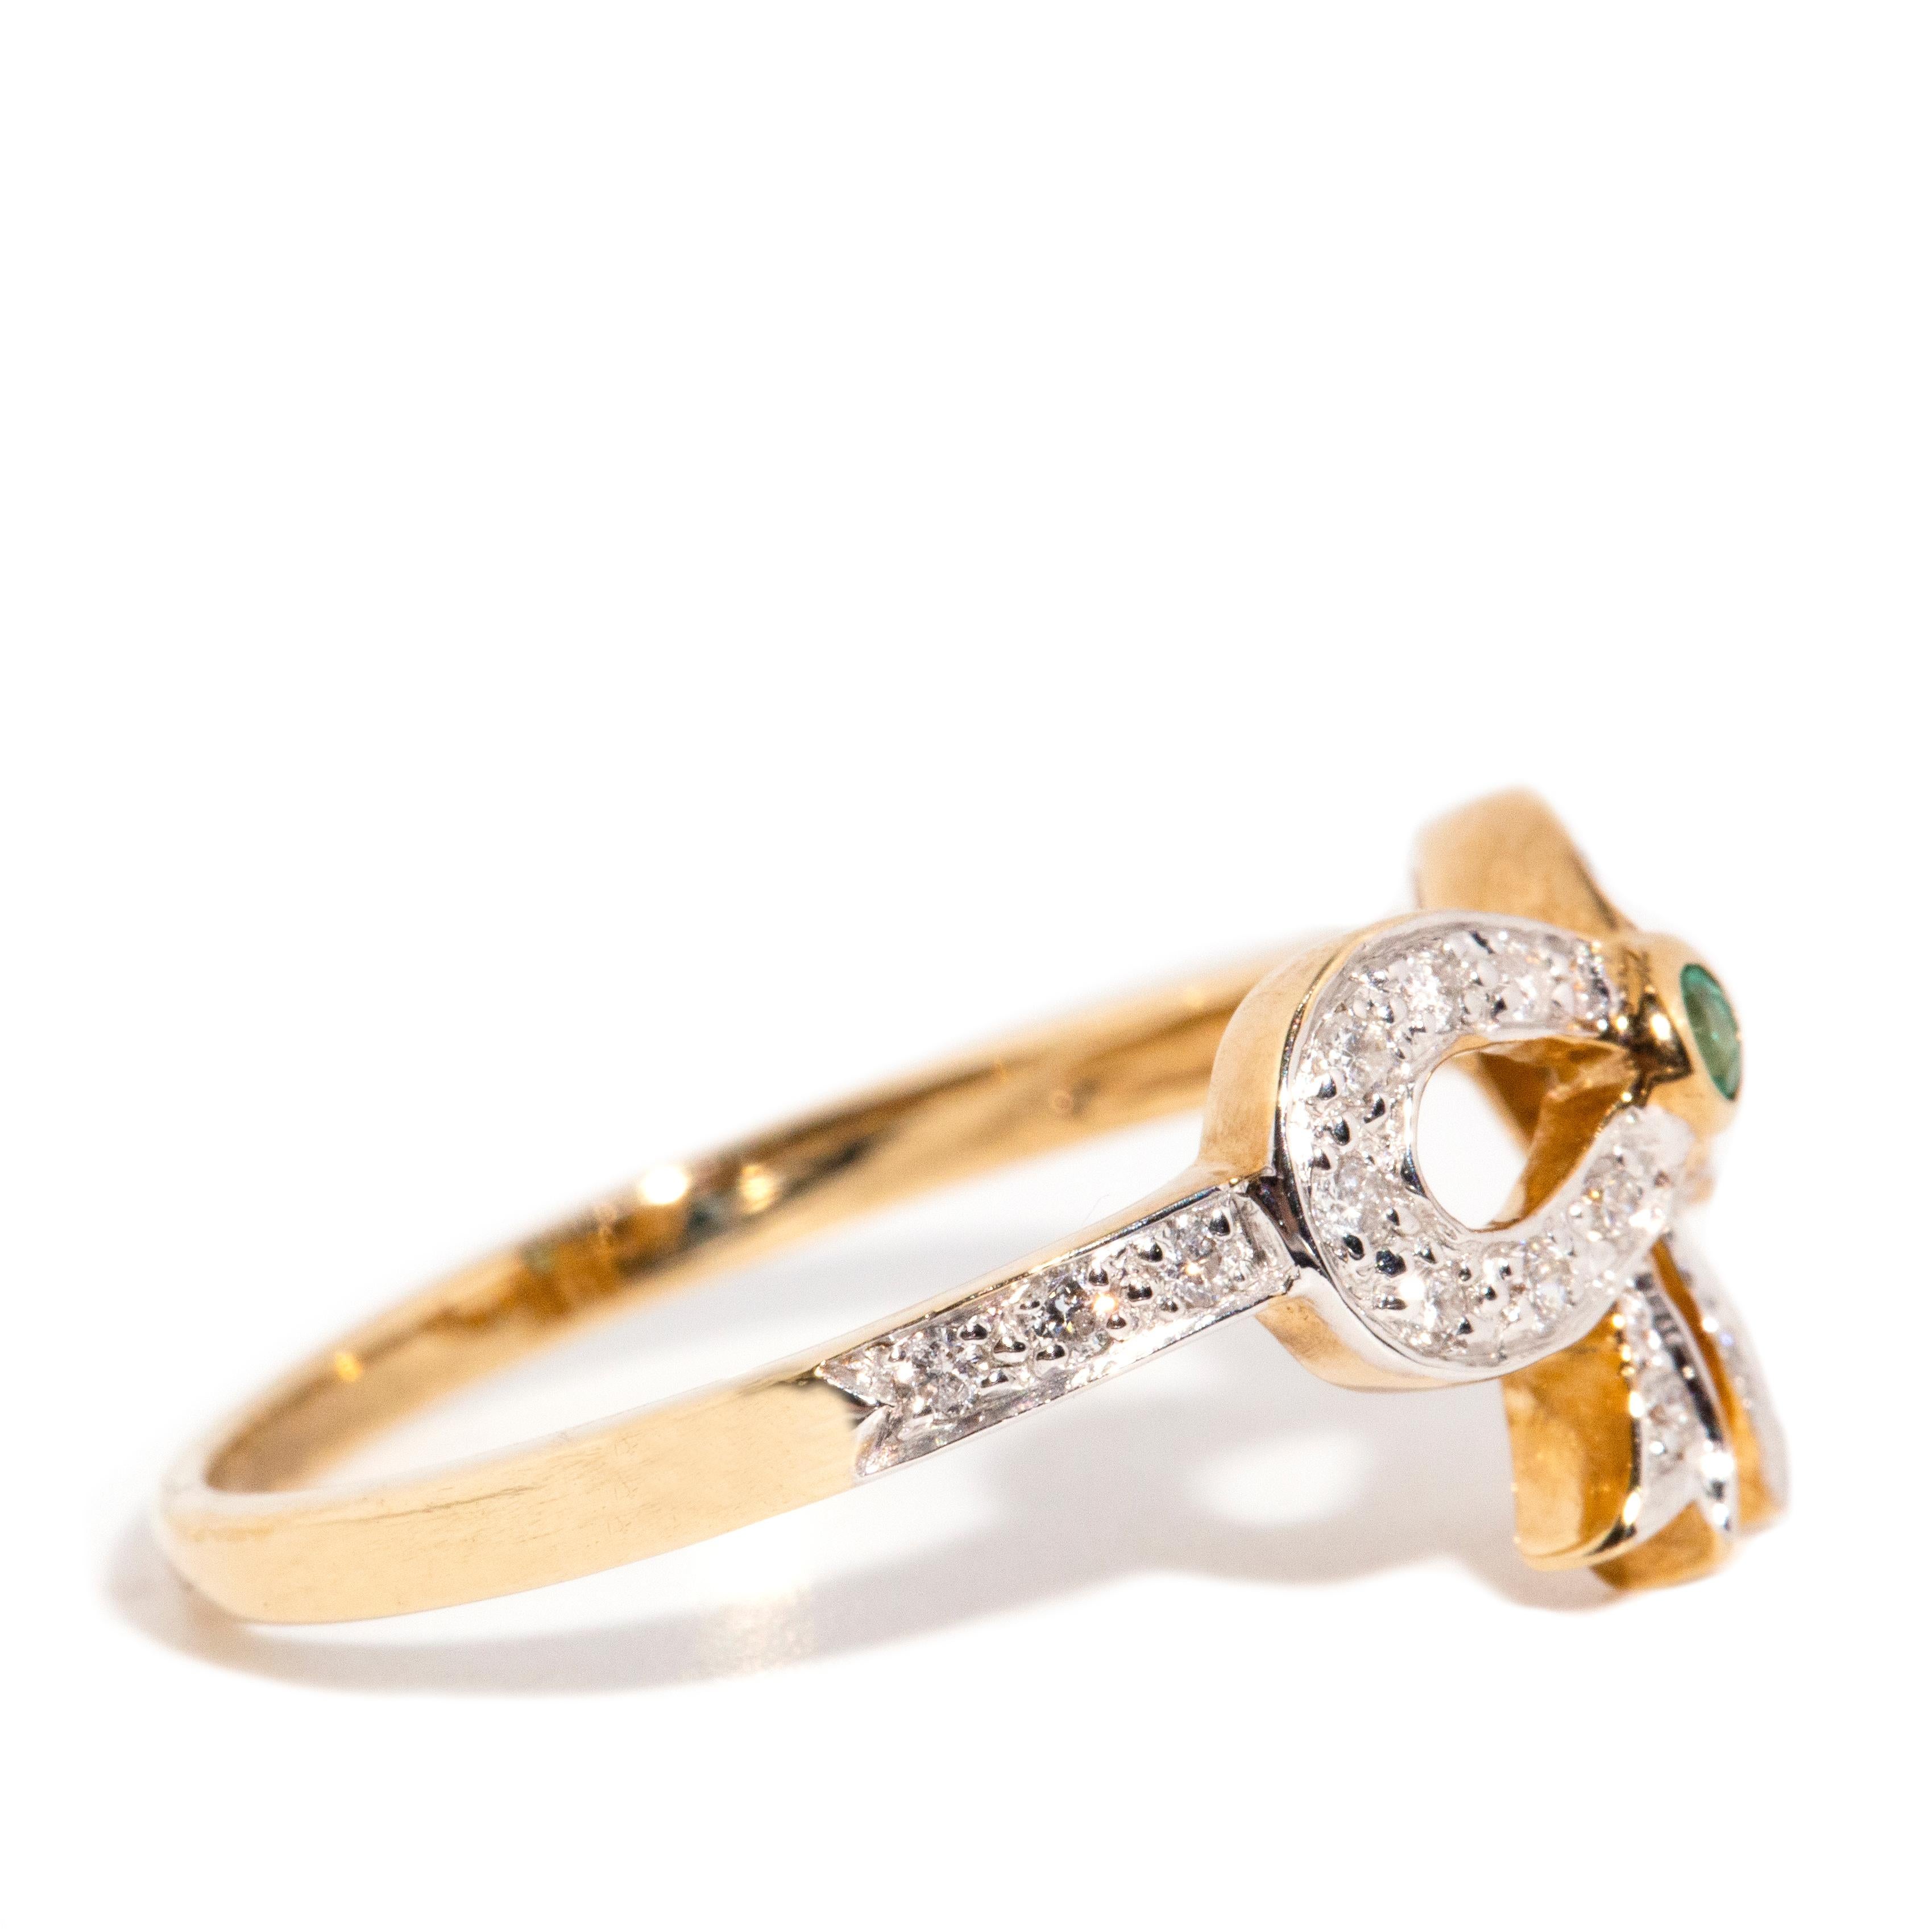 Women's Vintage Inspired Bright Green Emerald & Diamond Bow Ring 9 Carat Yellow Gold